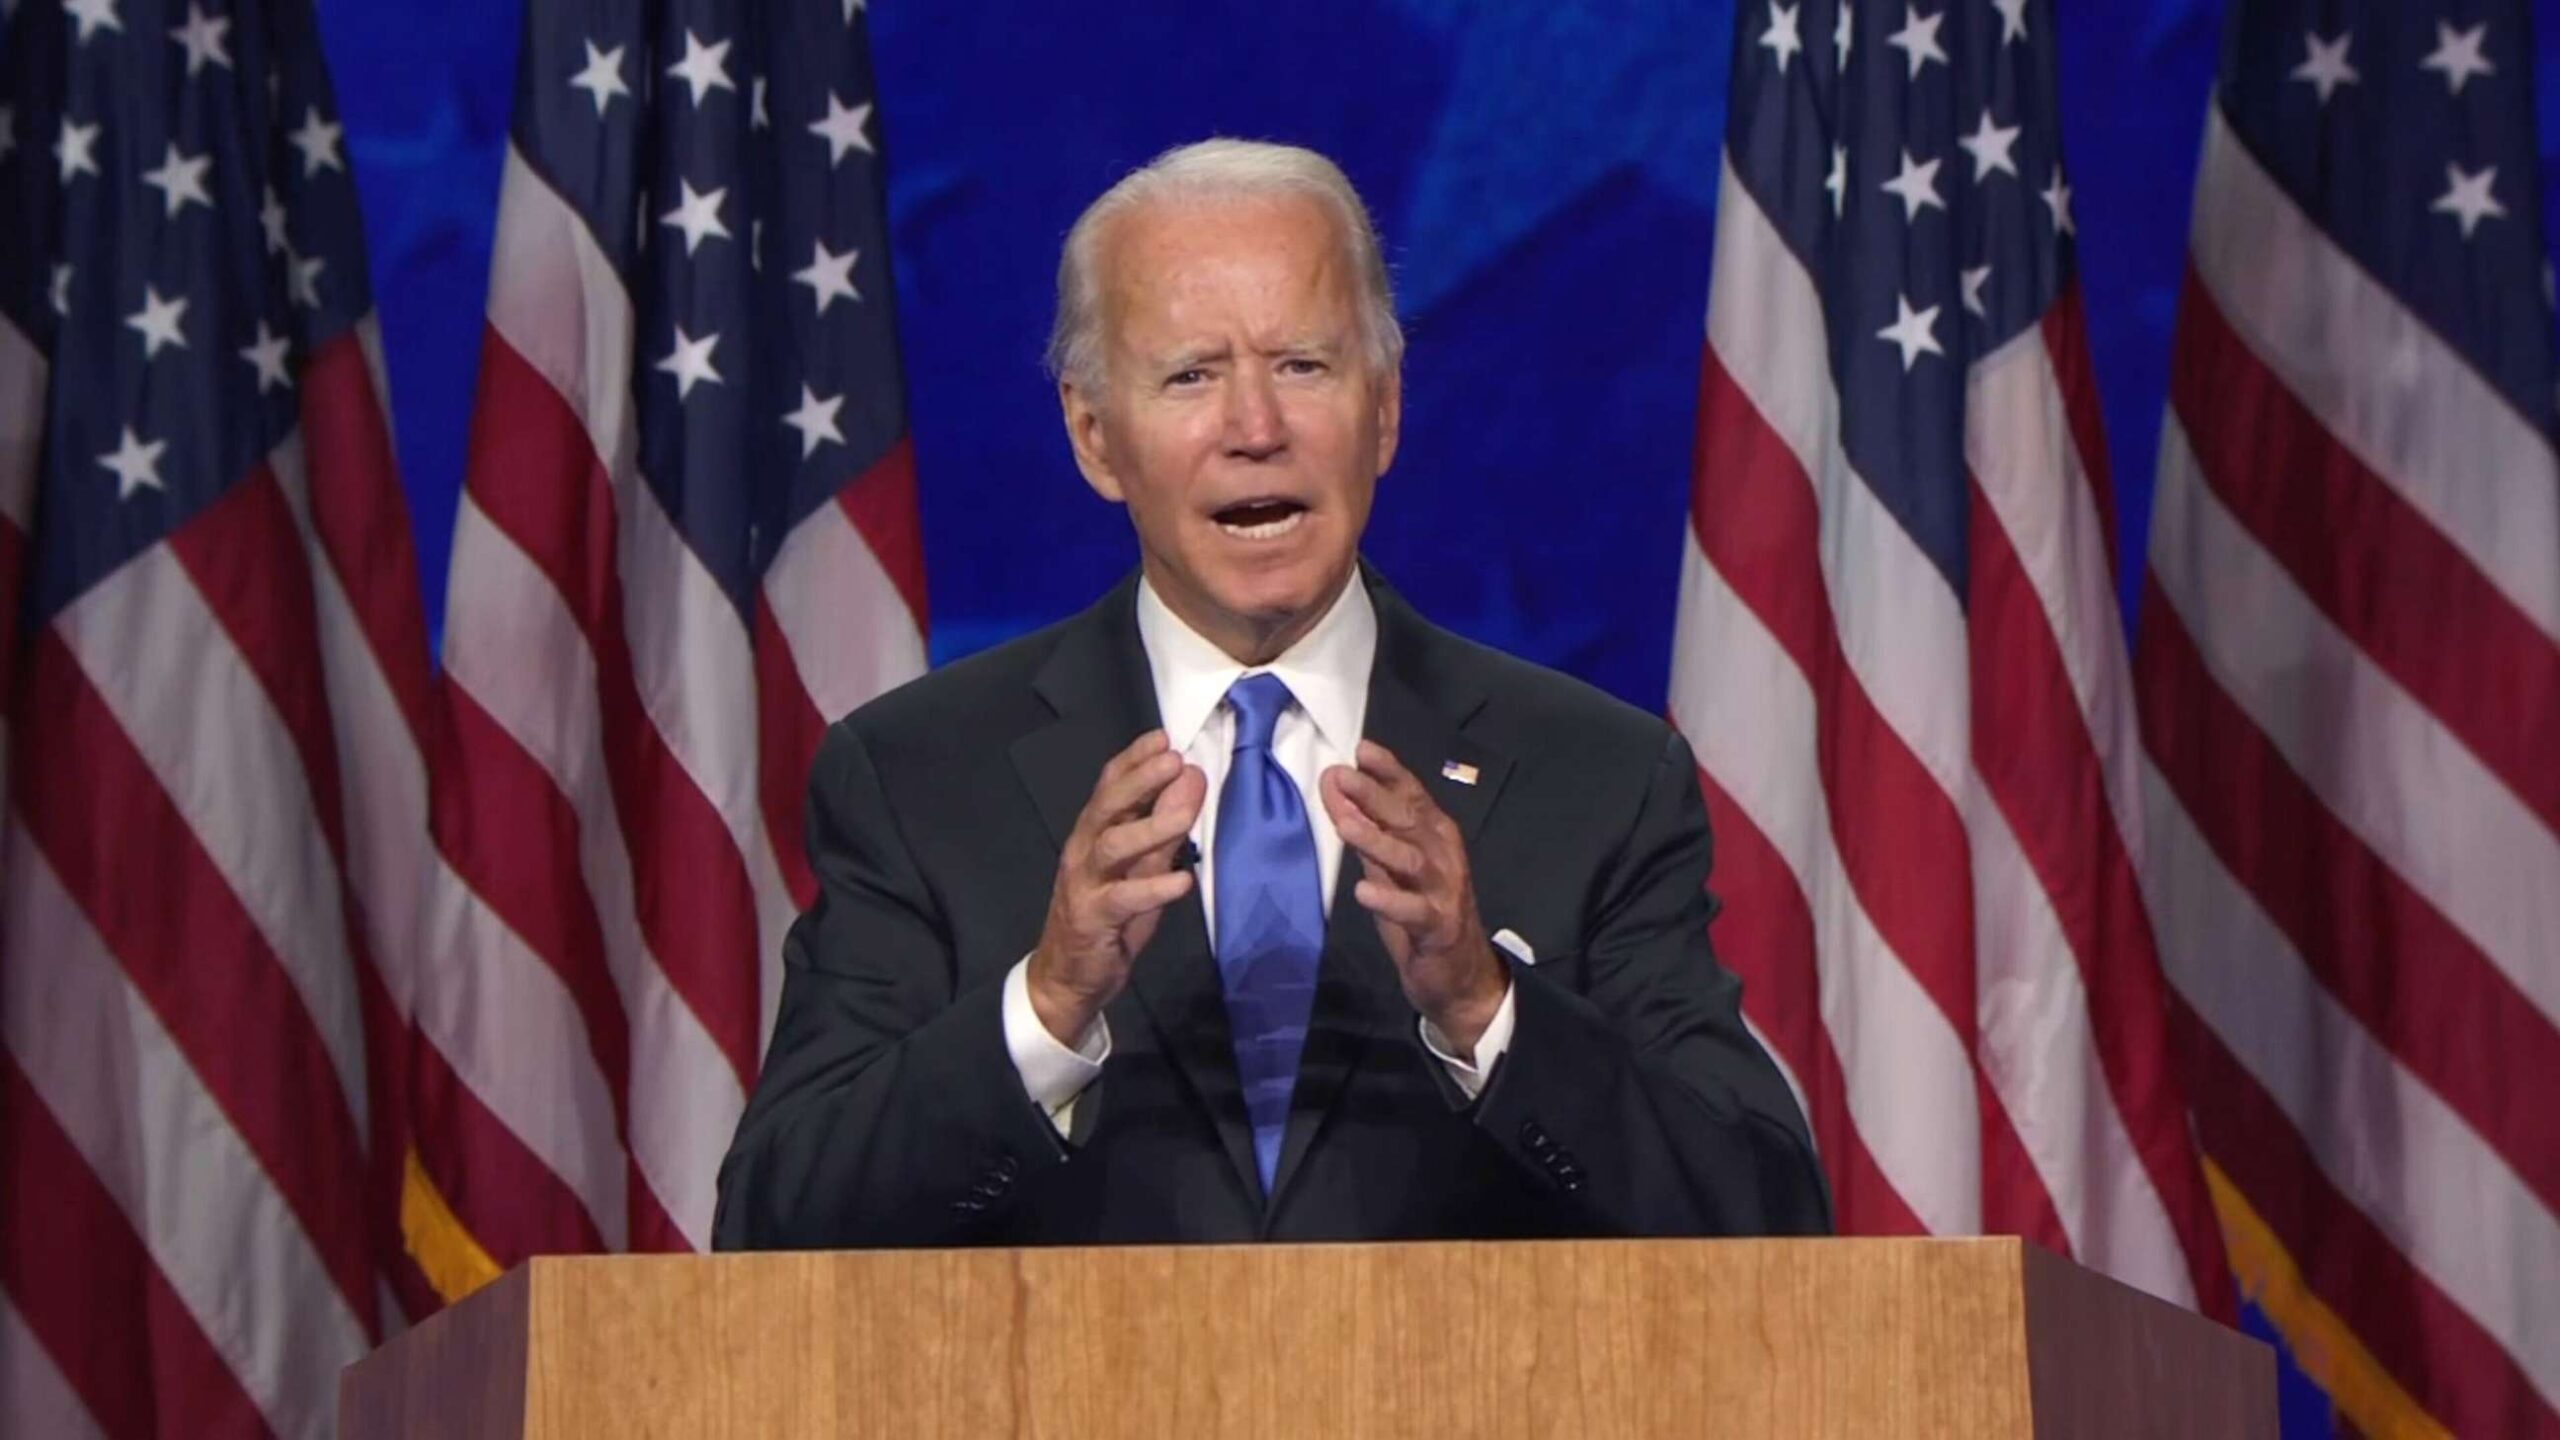 Joe Biden accepts the 2020 Democratic nomination